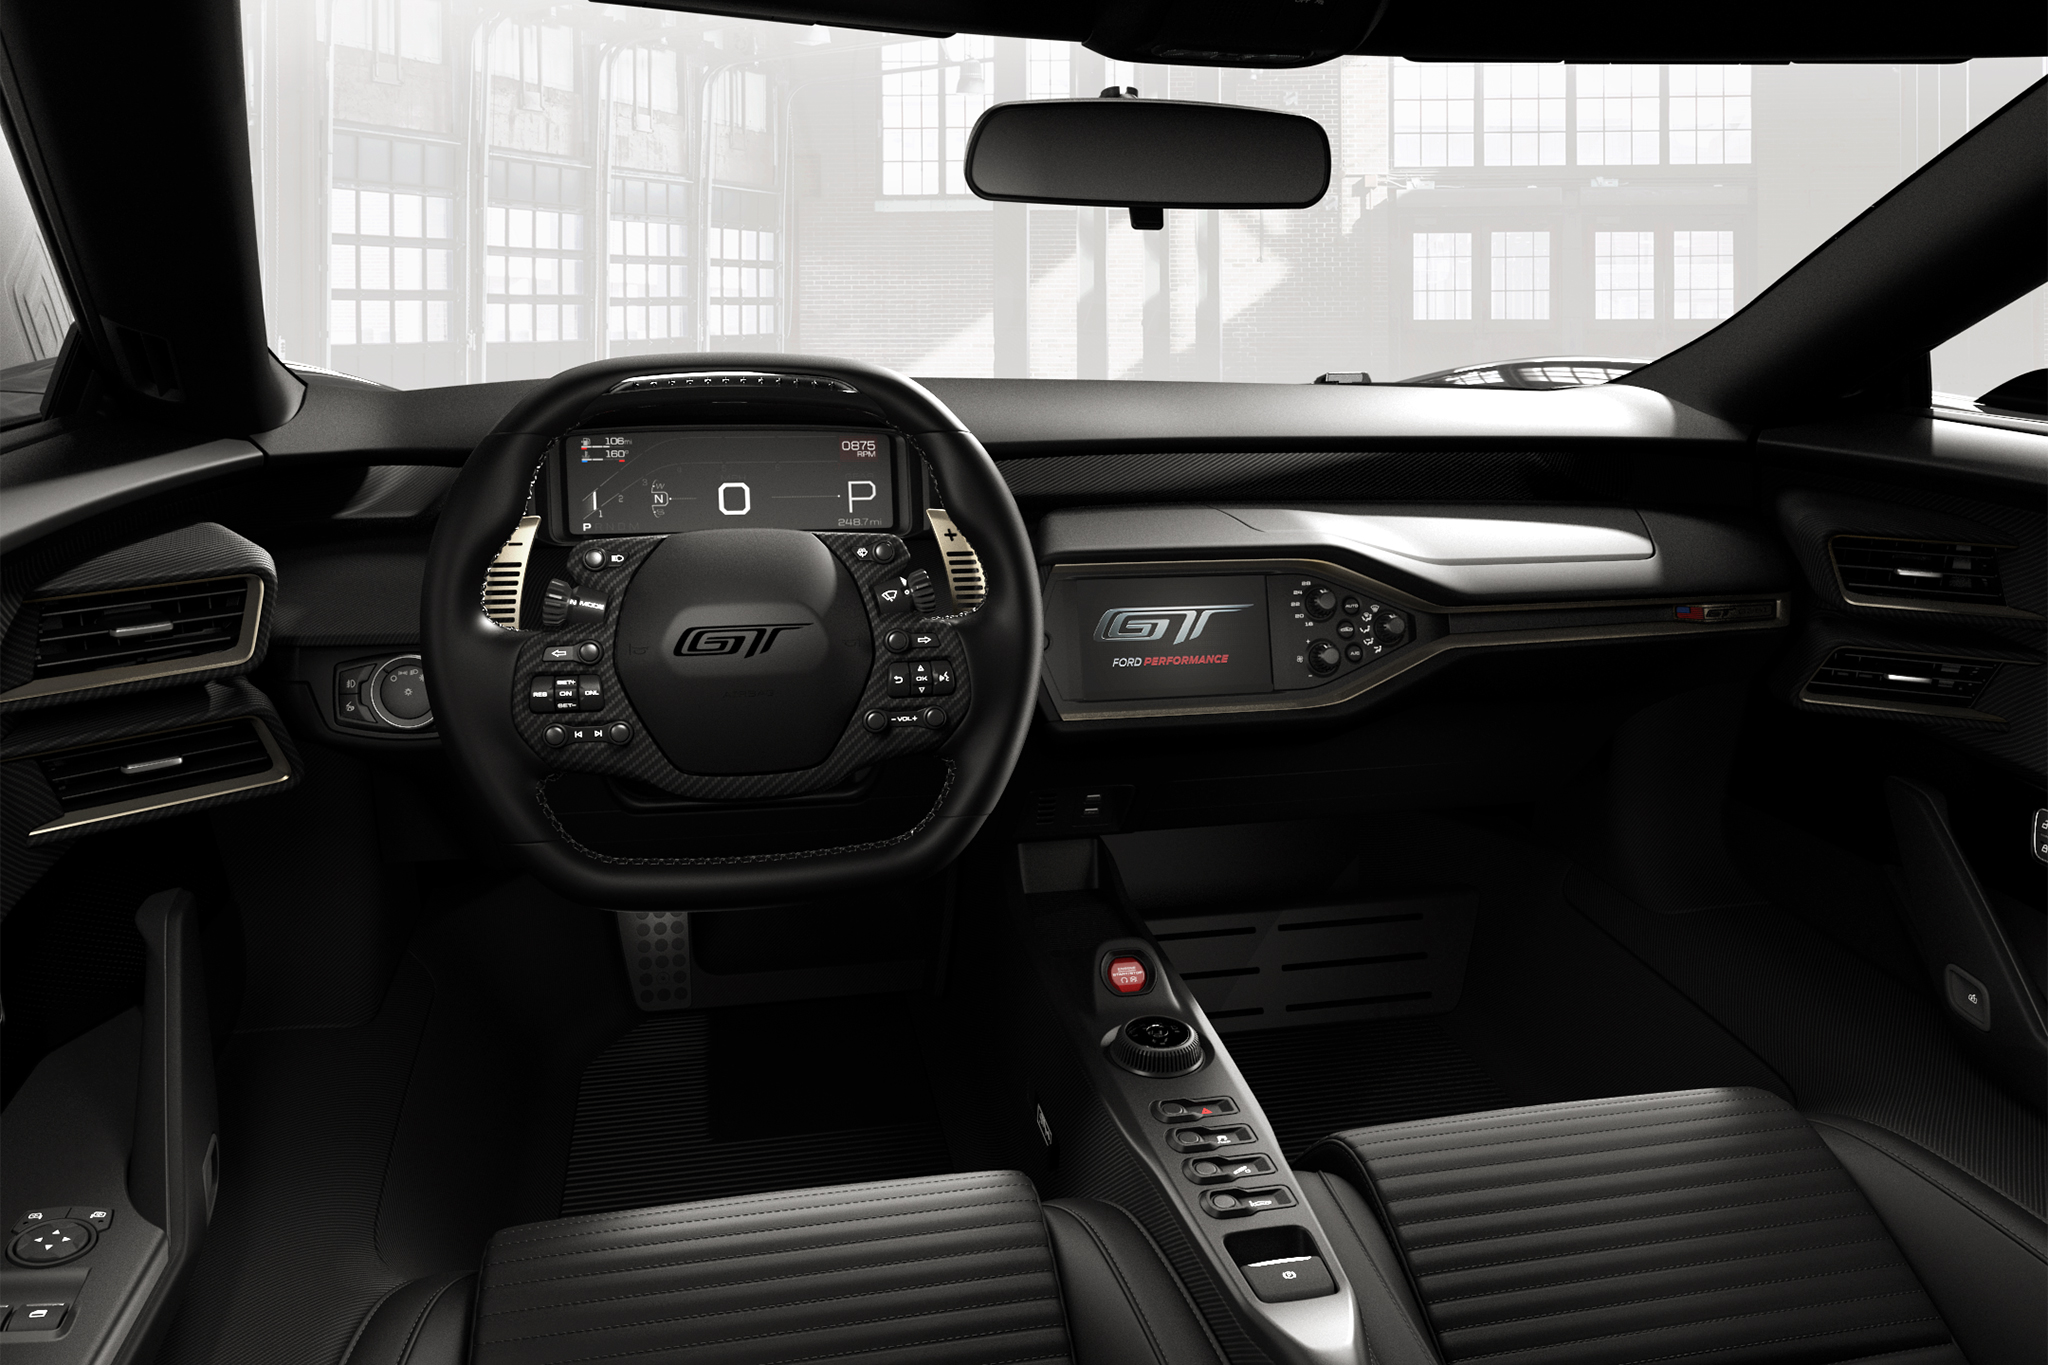 2017 Ford GT interior